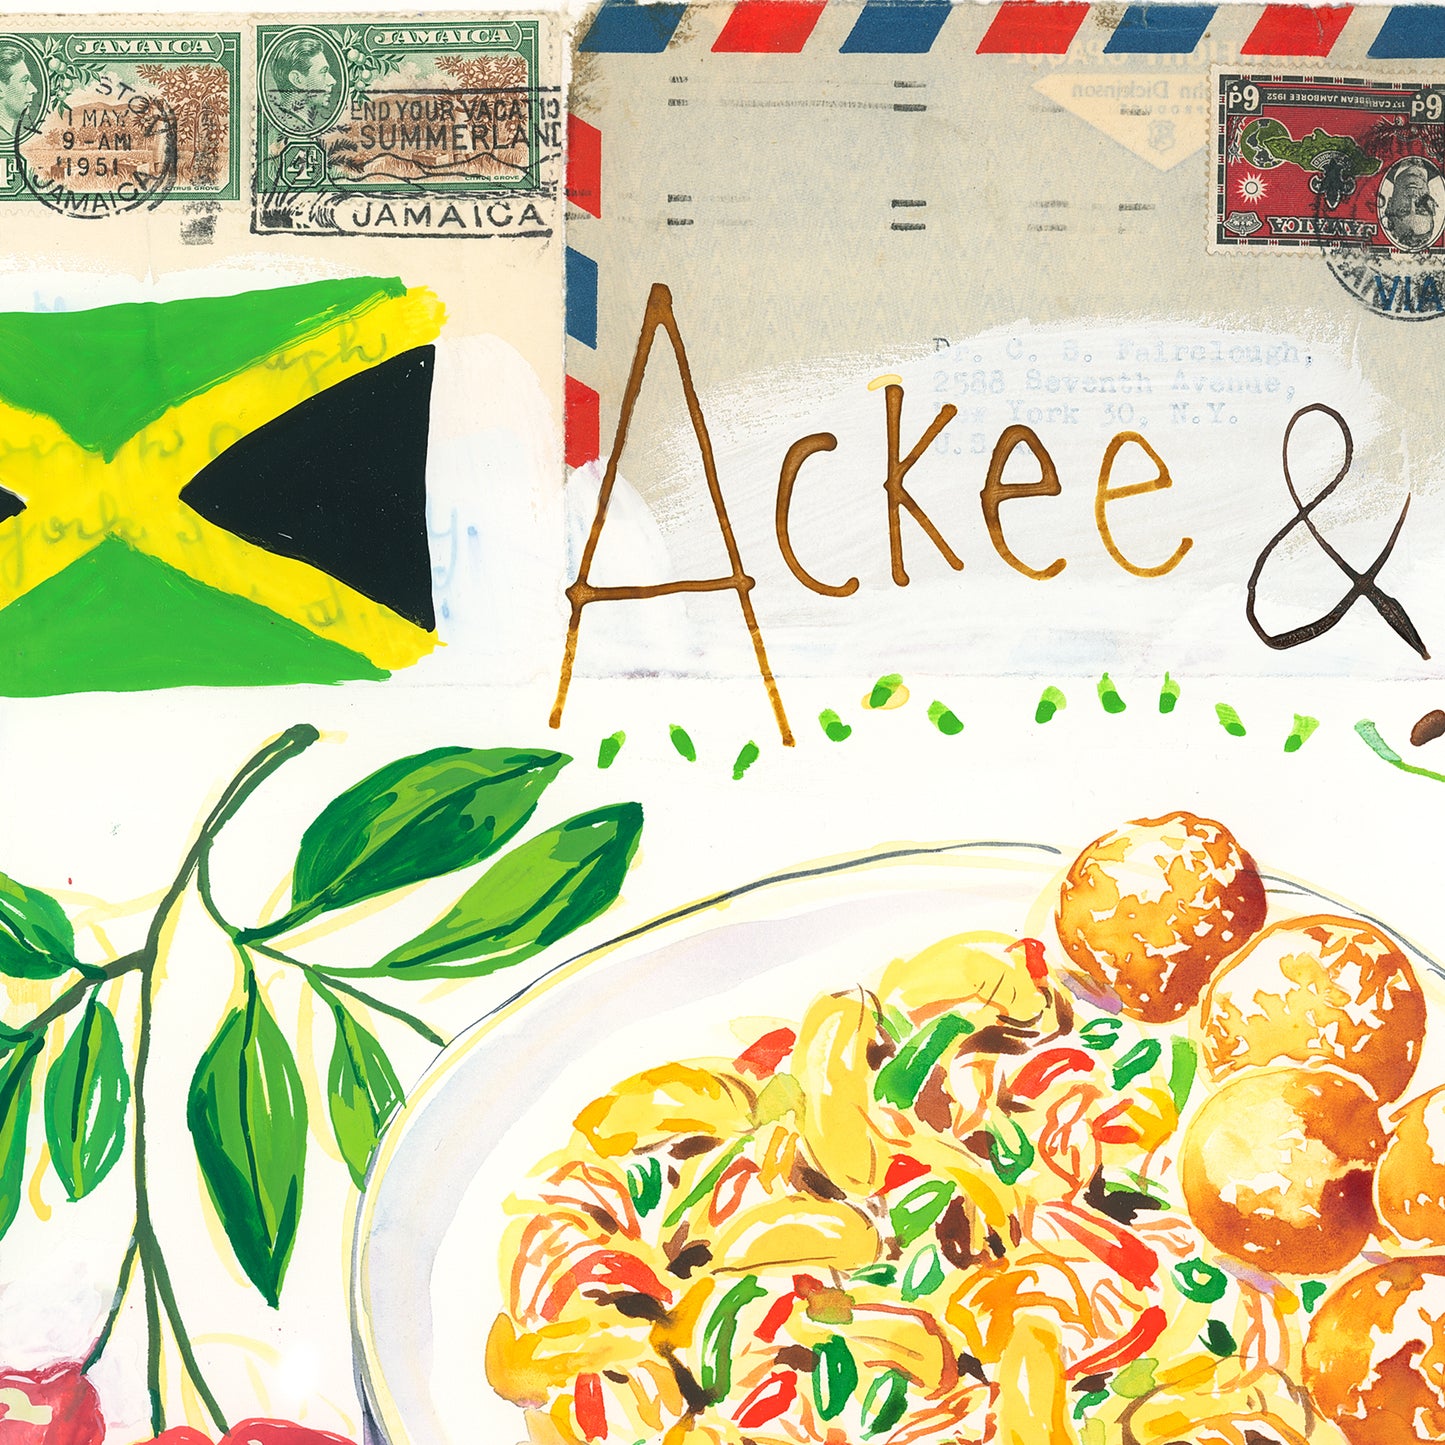 Jamaica Ackee and Saltfish recipe